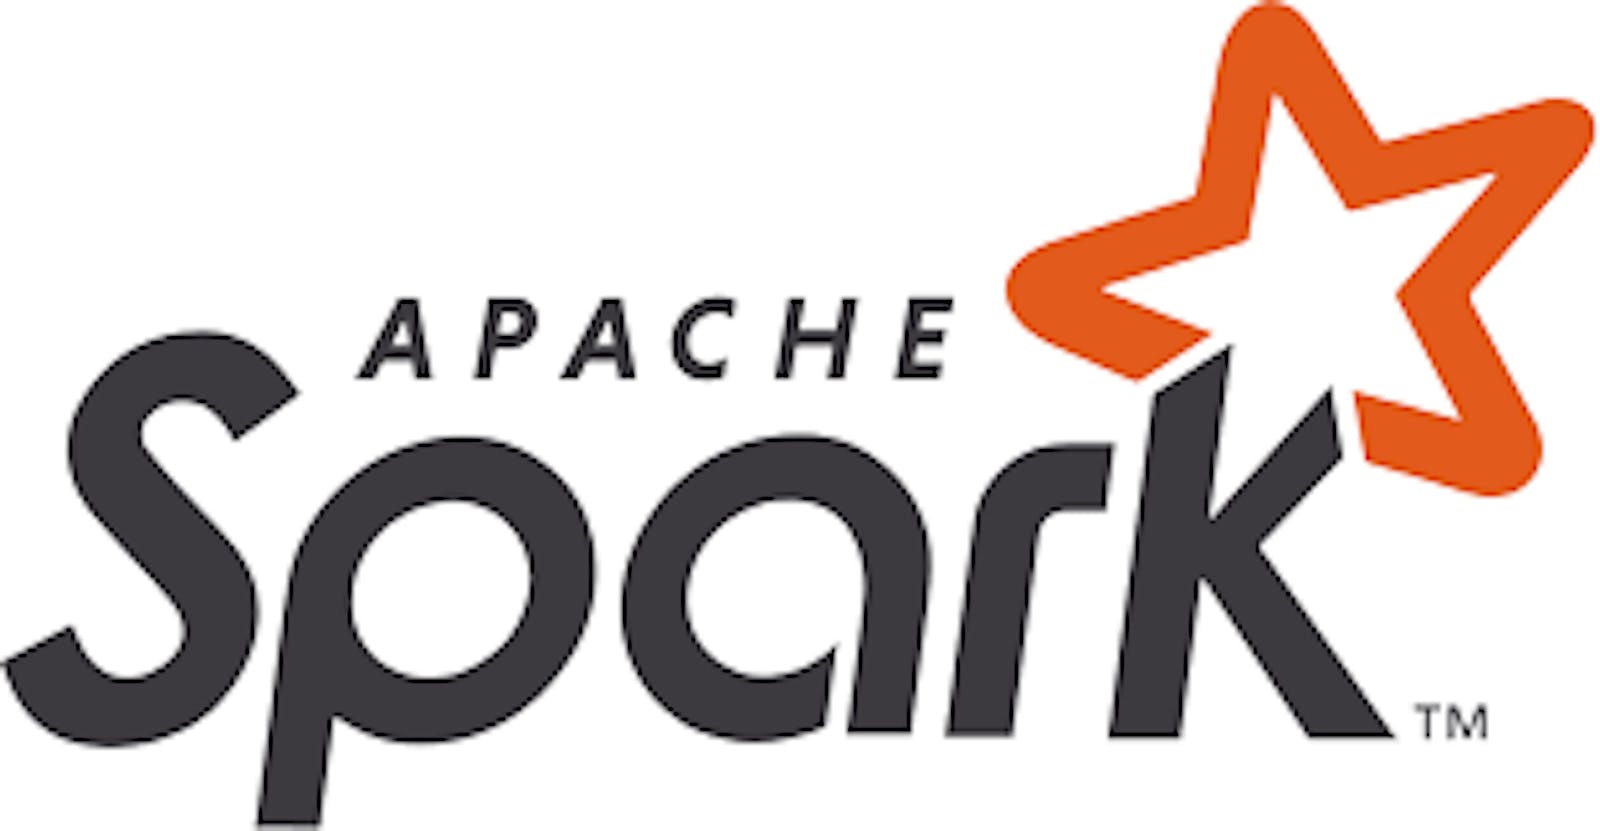 5 Apache Spark Use Cases